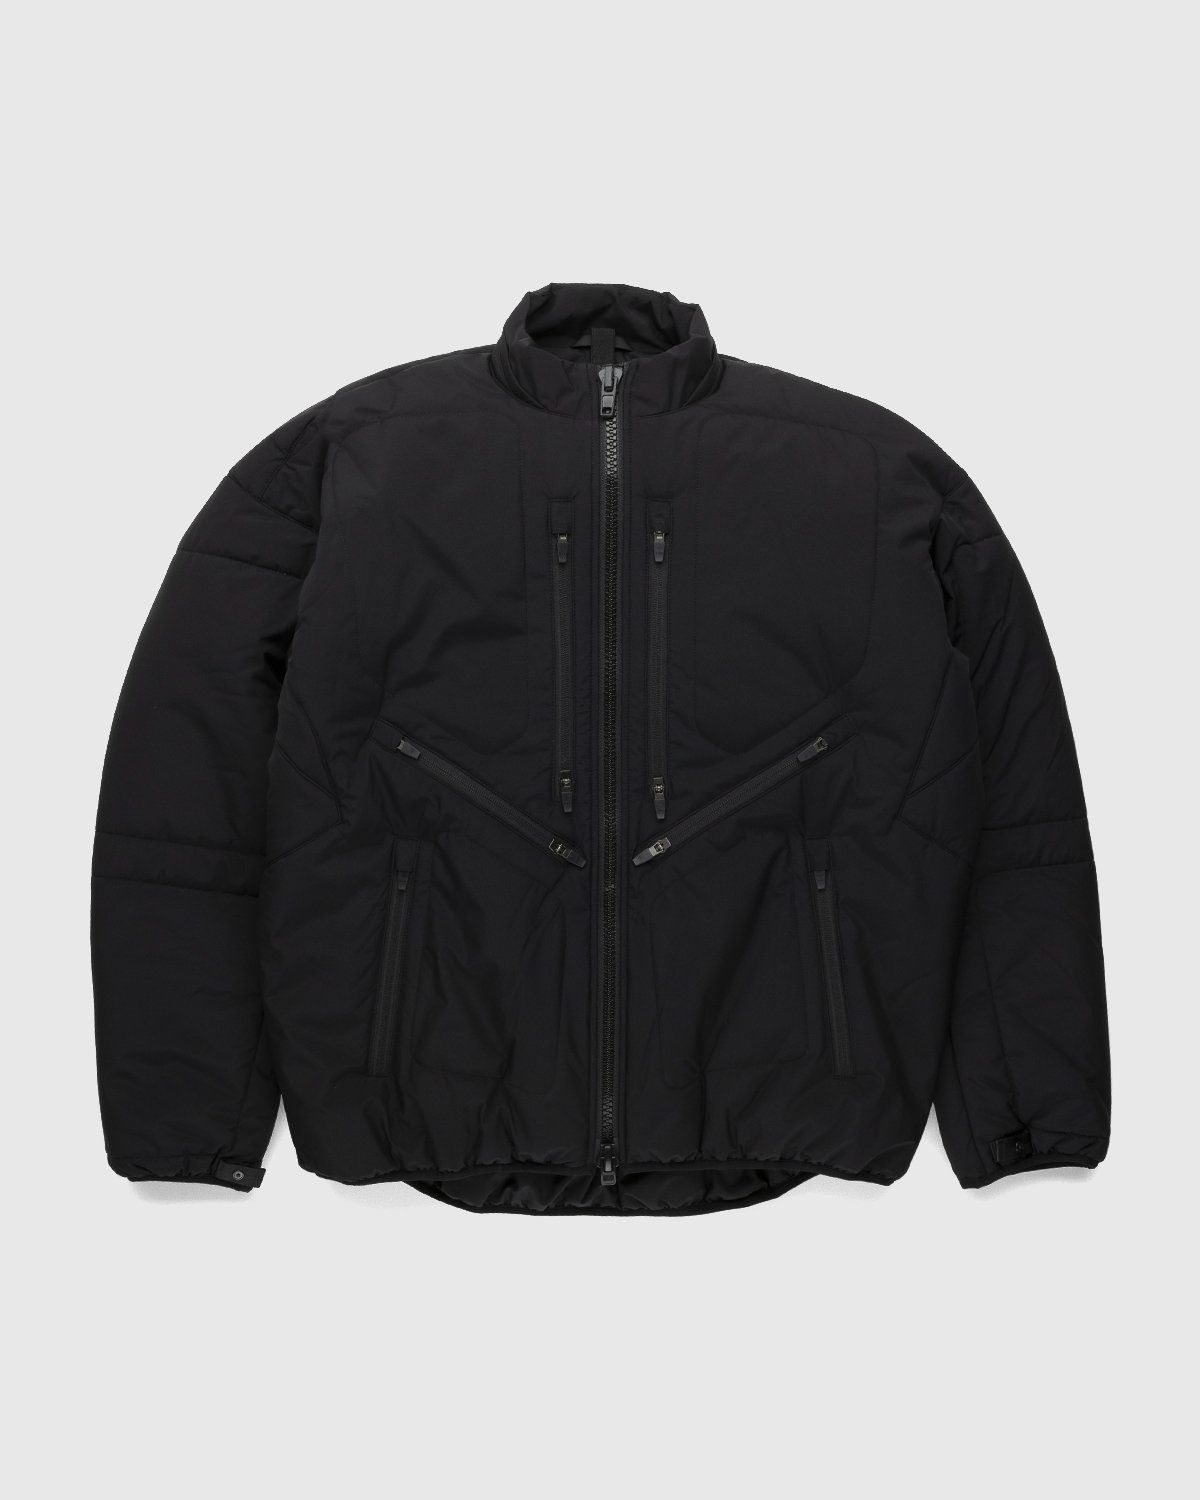 ACRONYM – J91-WS Jacket Black - Outerwear - Black - Image 1